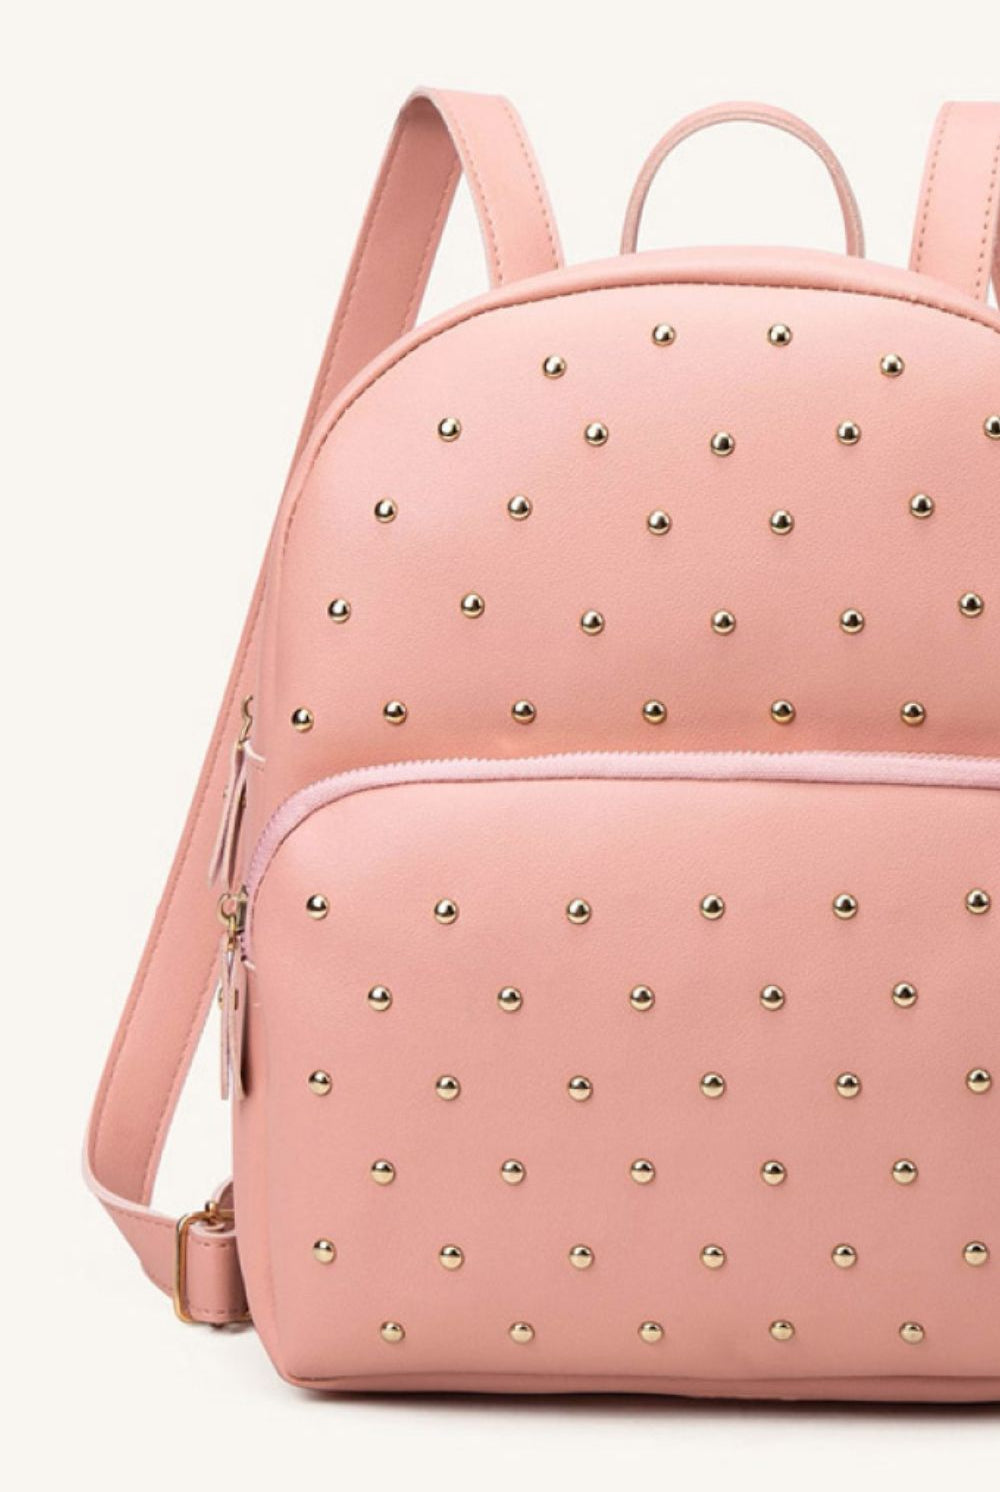 Pink Studded PU Leather Backpack Handbags